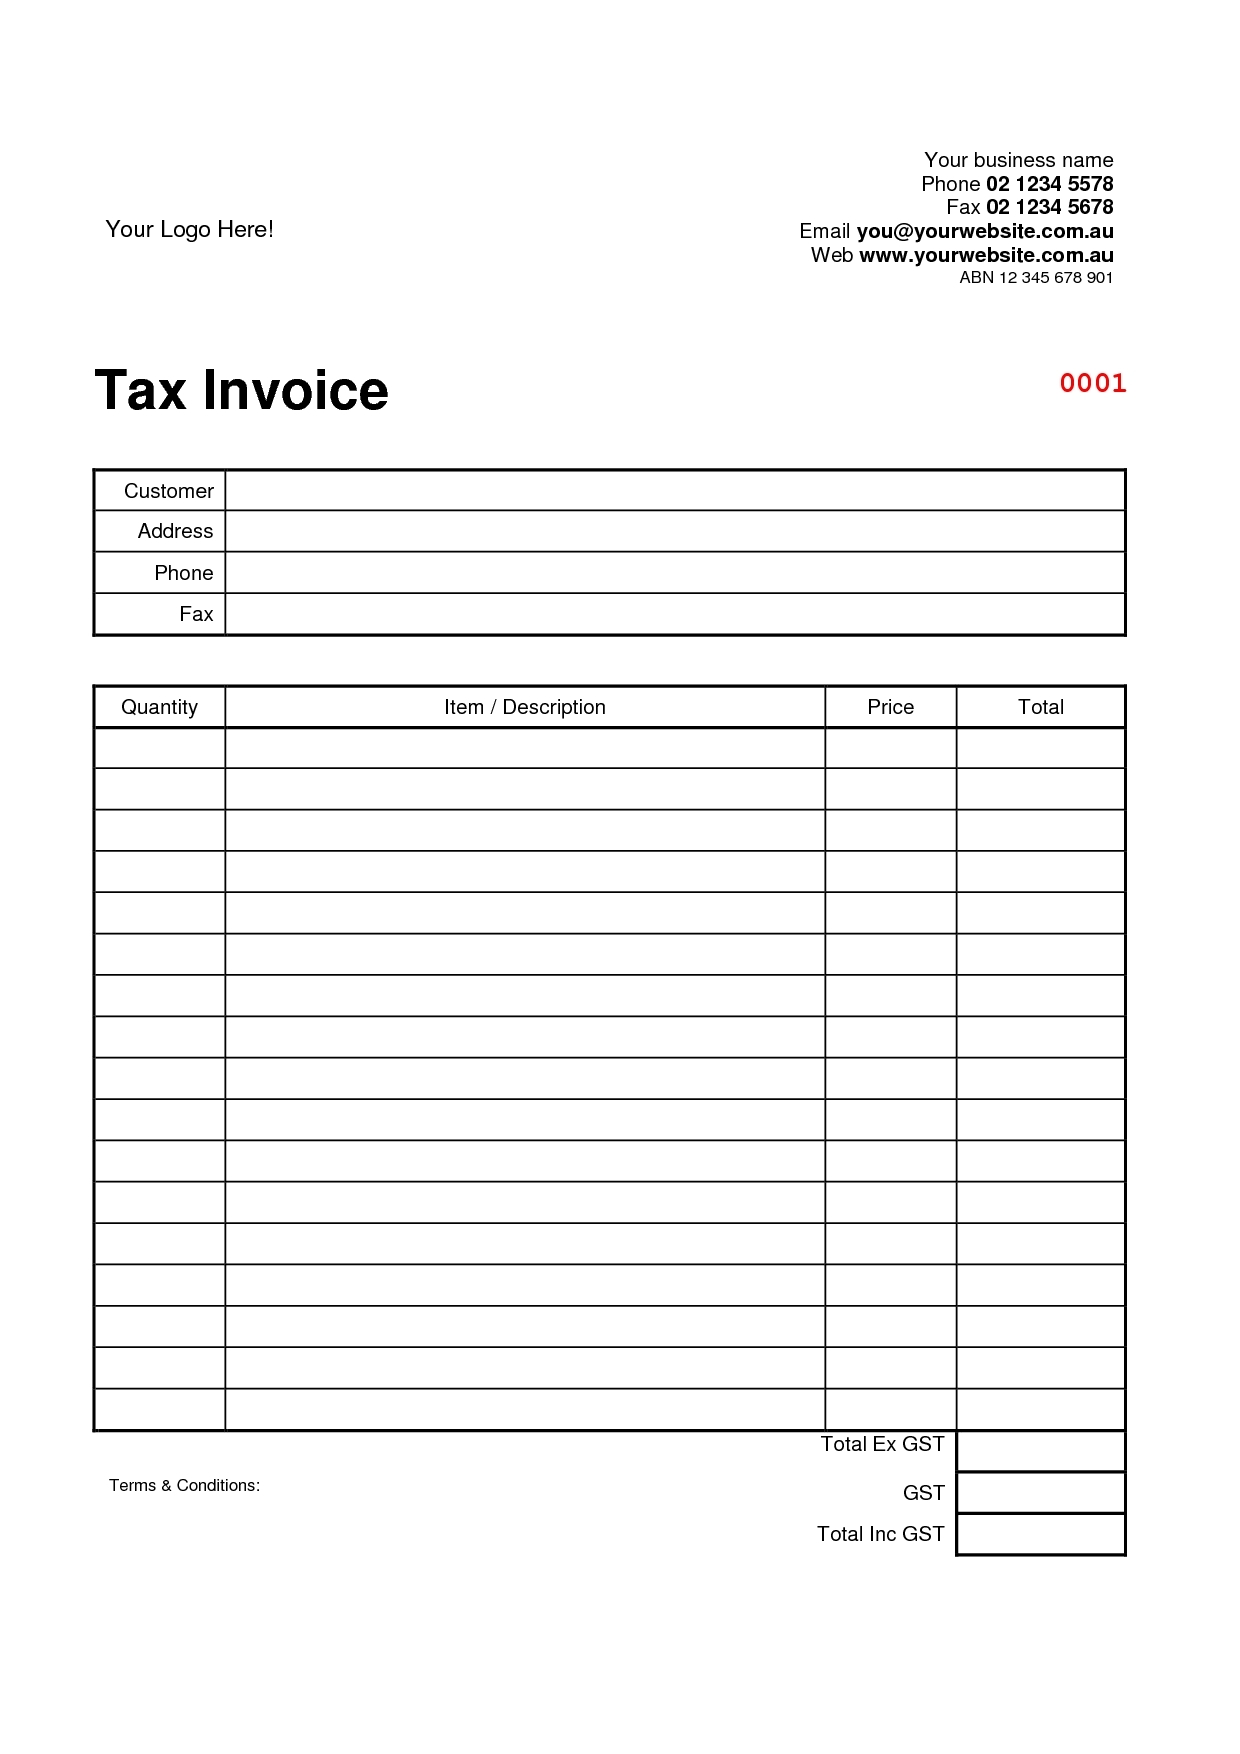 invoice sample template blank invoice template blankinvoice blank tax invoice